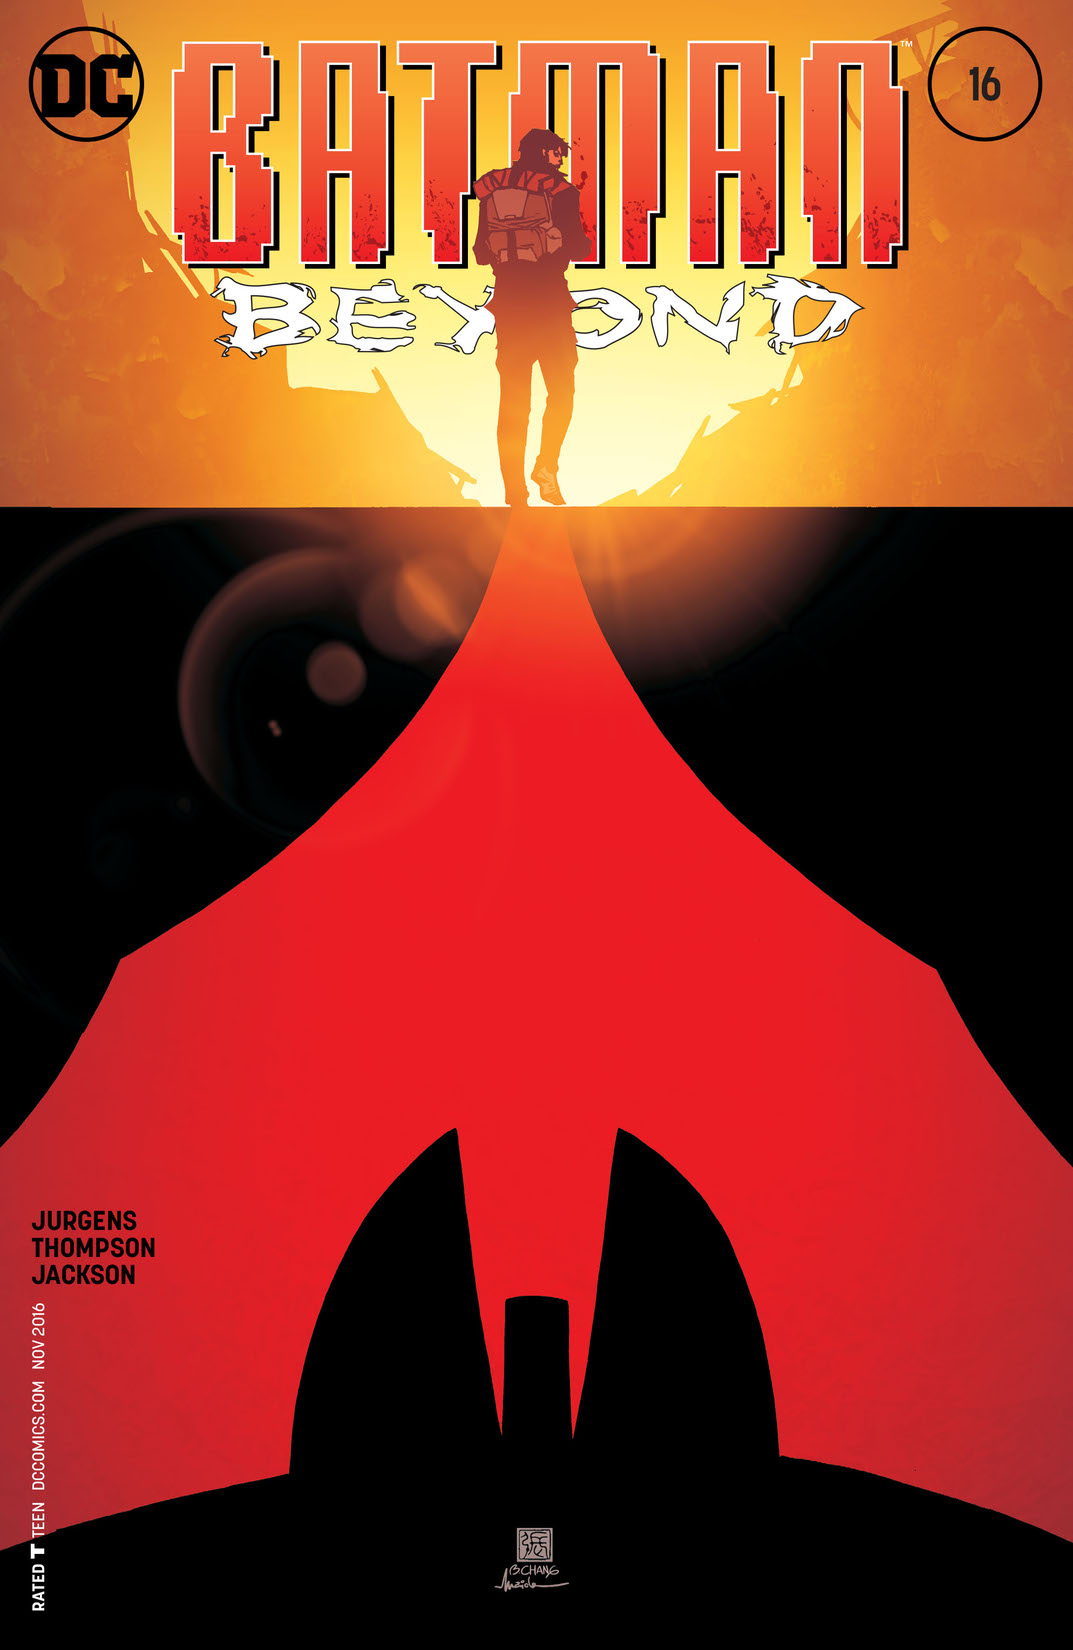 Batman Beyond (2015-) #16 preview images